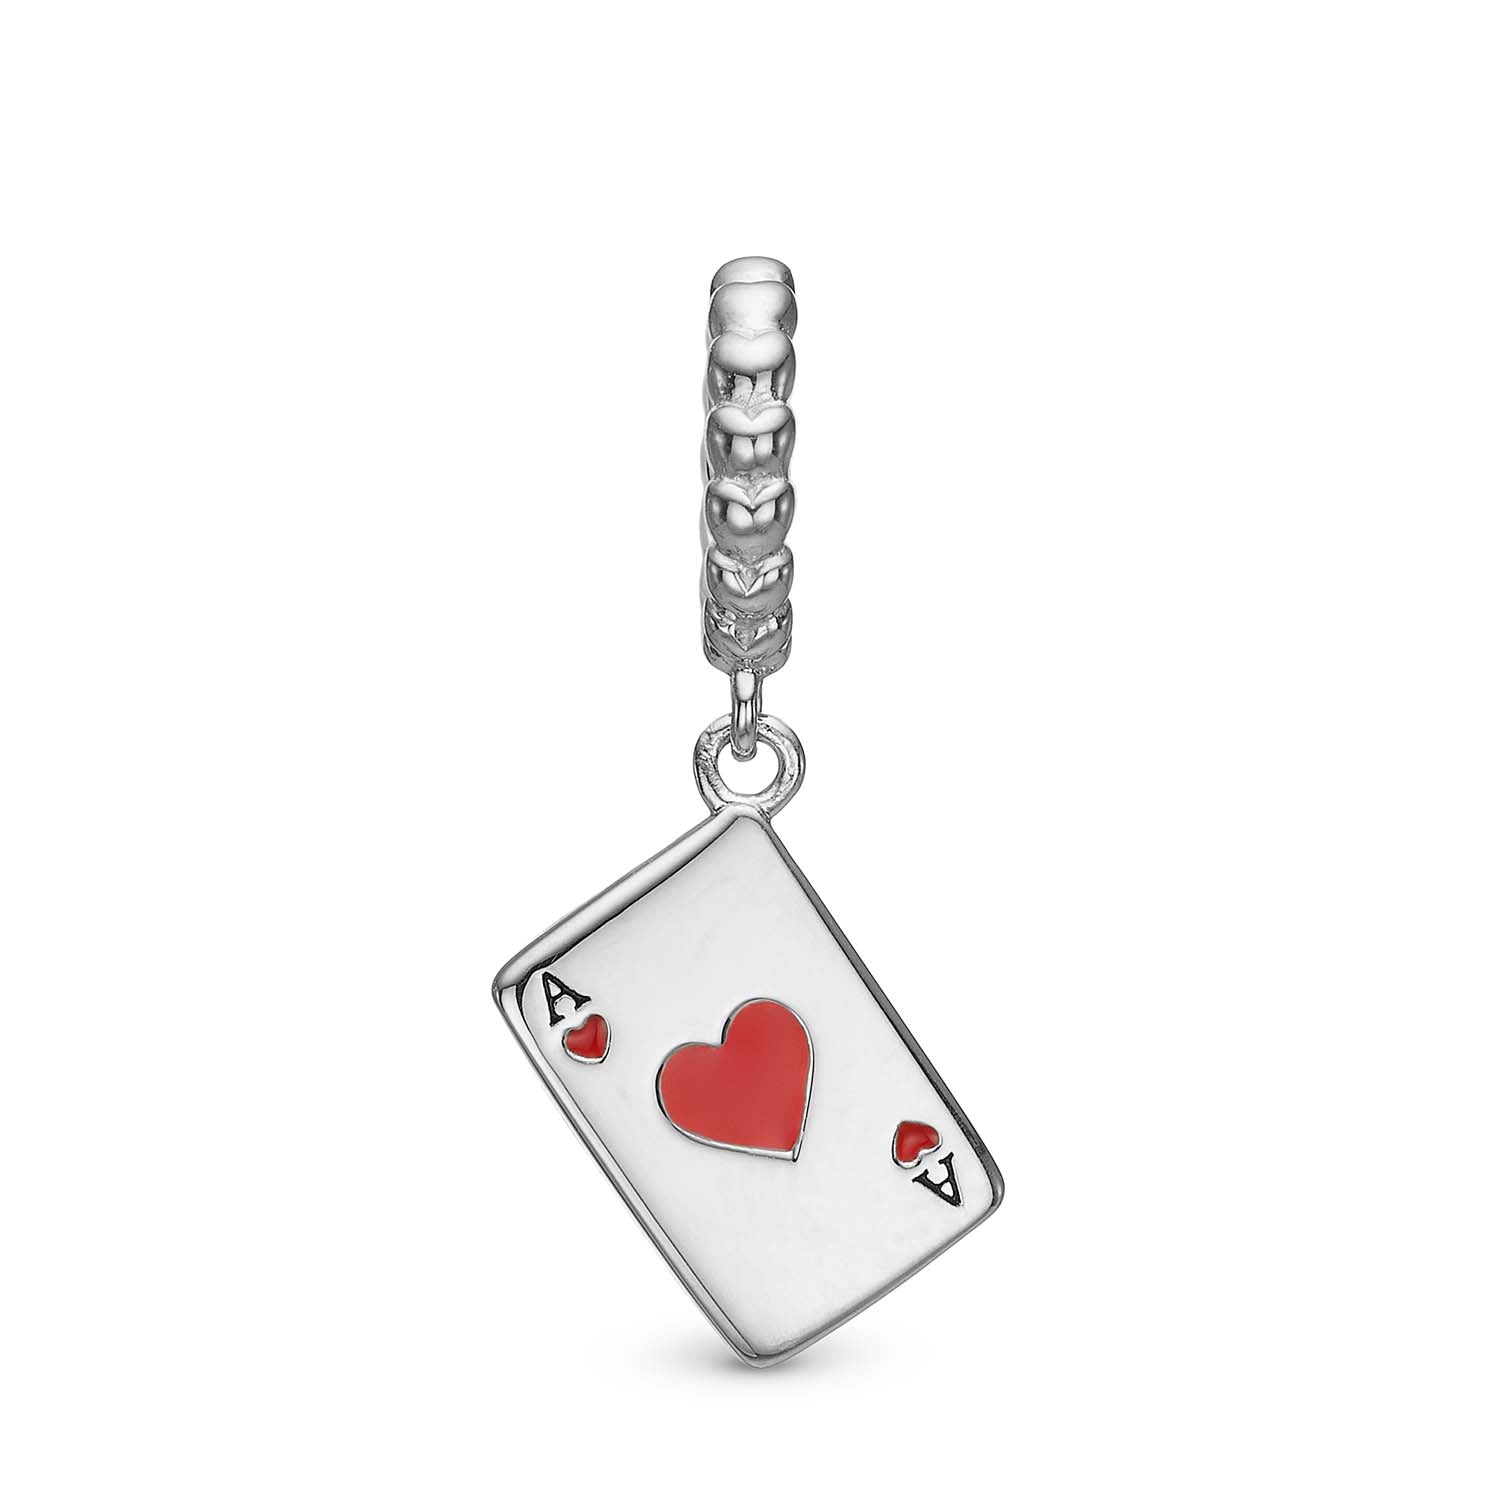 Billede af Christina Design London Jewelry & Watches - Ace of Hearts carm sølv 6 mm.